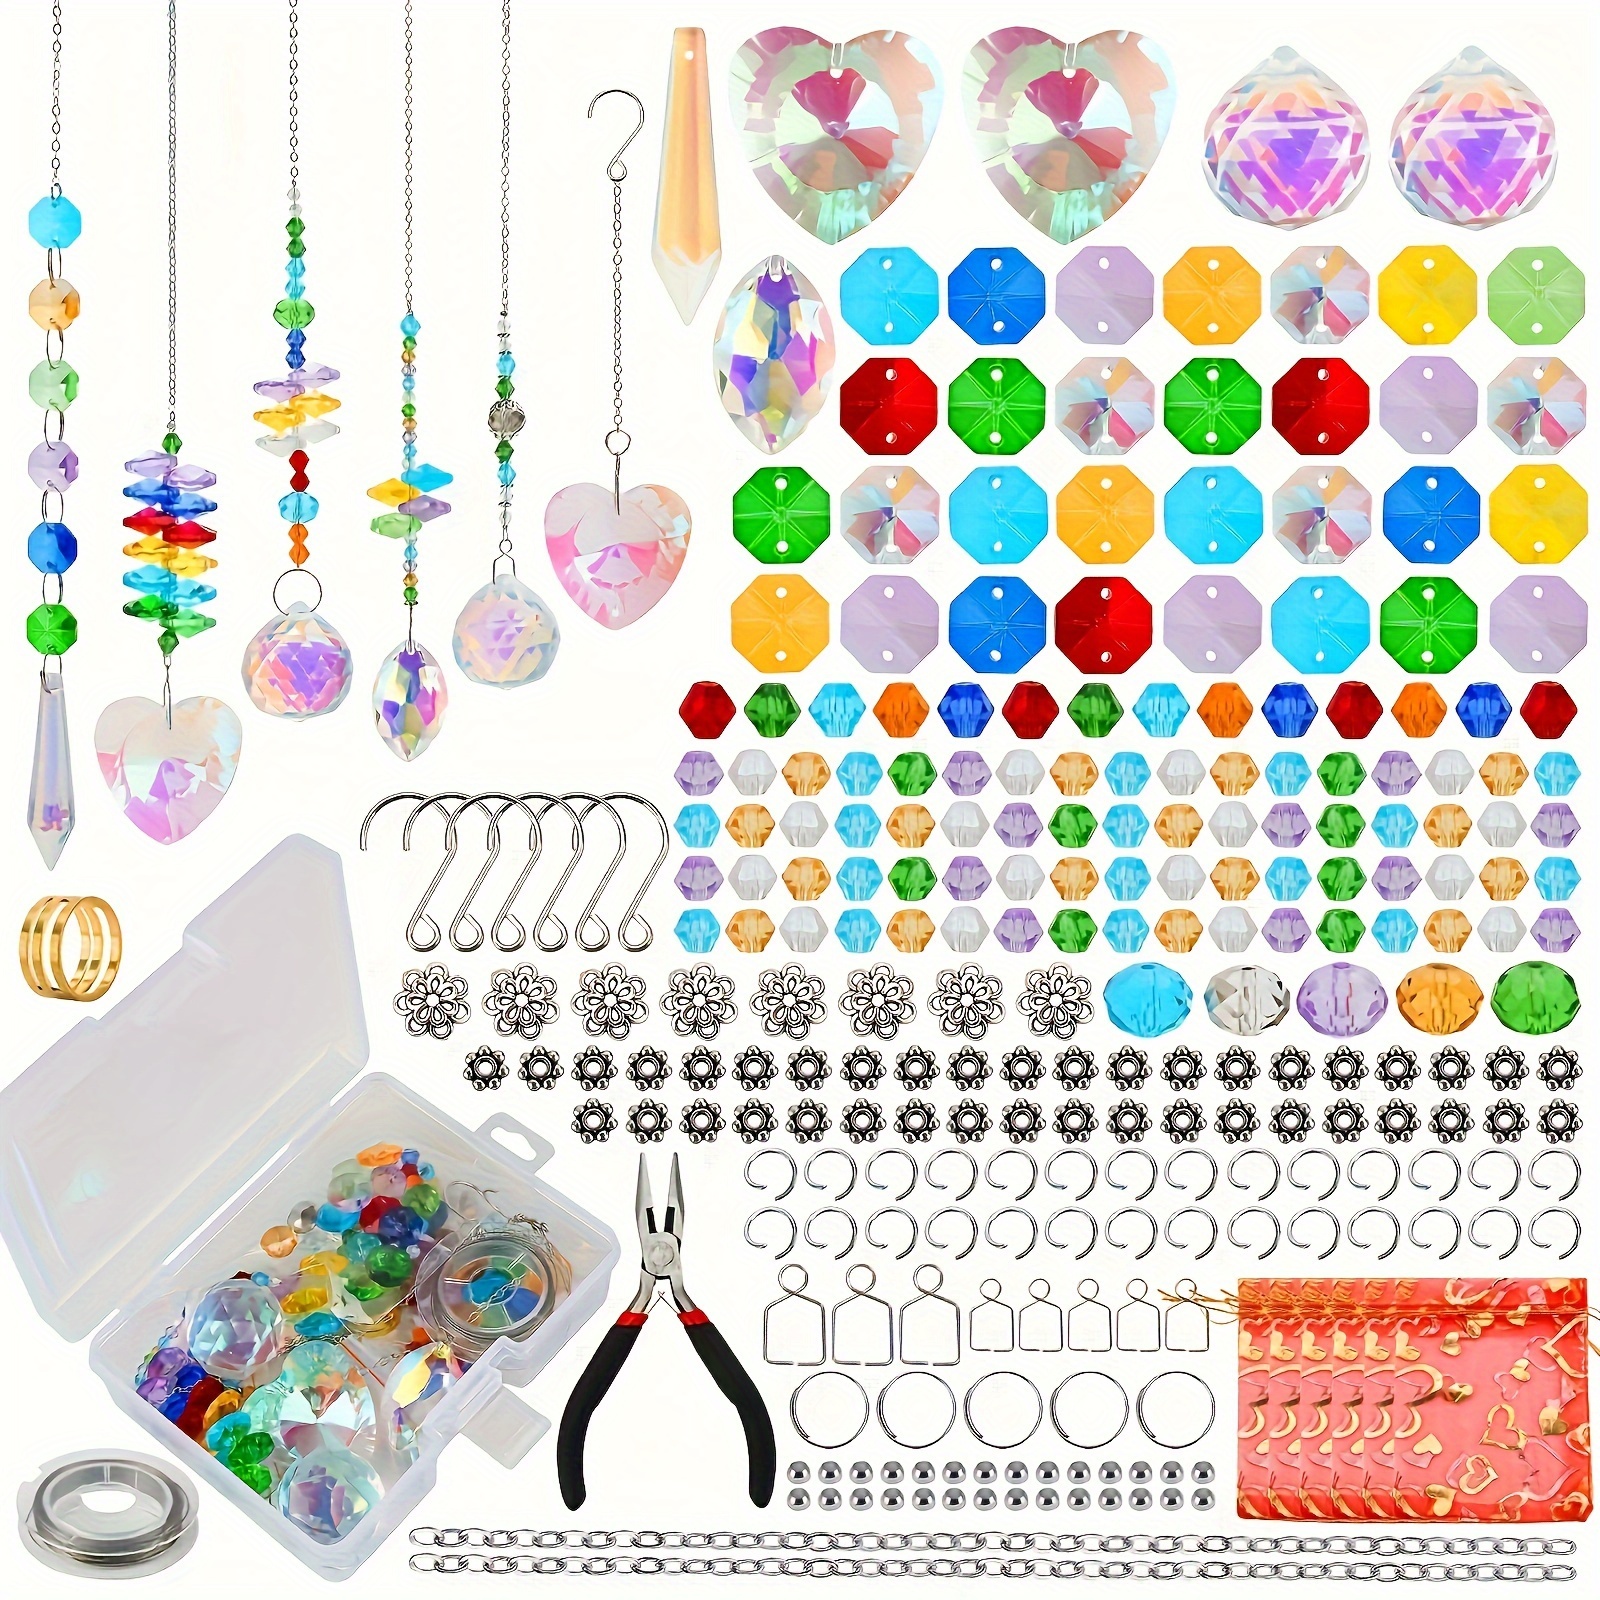 

460-piece Diy Suncatcher Kit - Bohemian Style Crystal Bead & Rainbow Prism Set For Window Hanging, Indoor/outdoor Garden Decor - Perfect Mother's Day Craft Gift